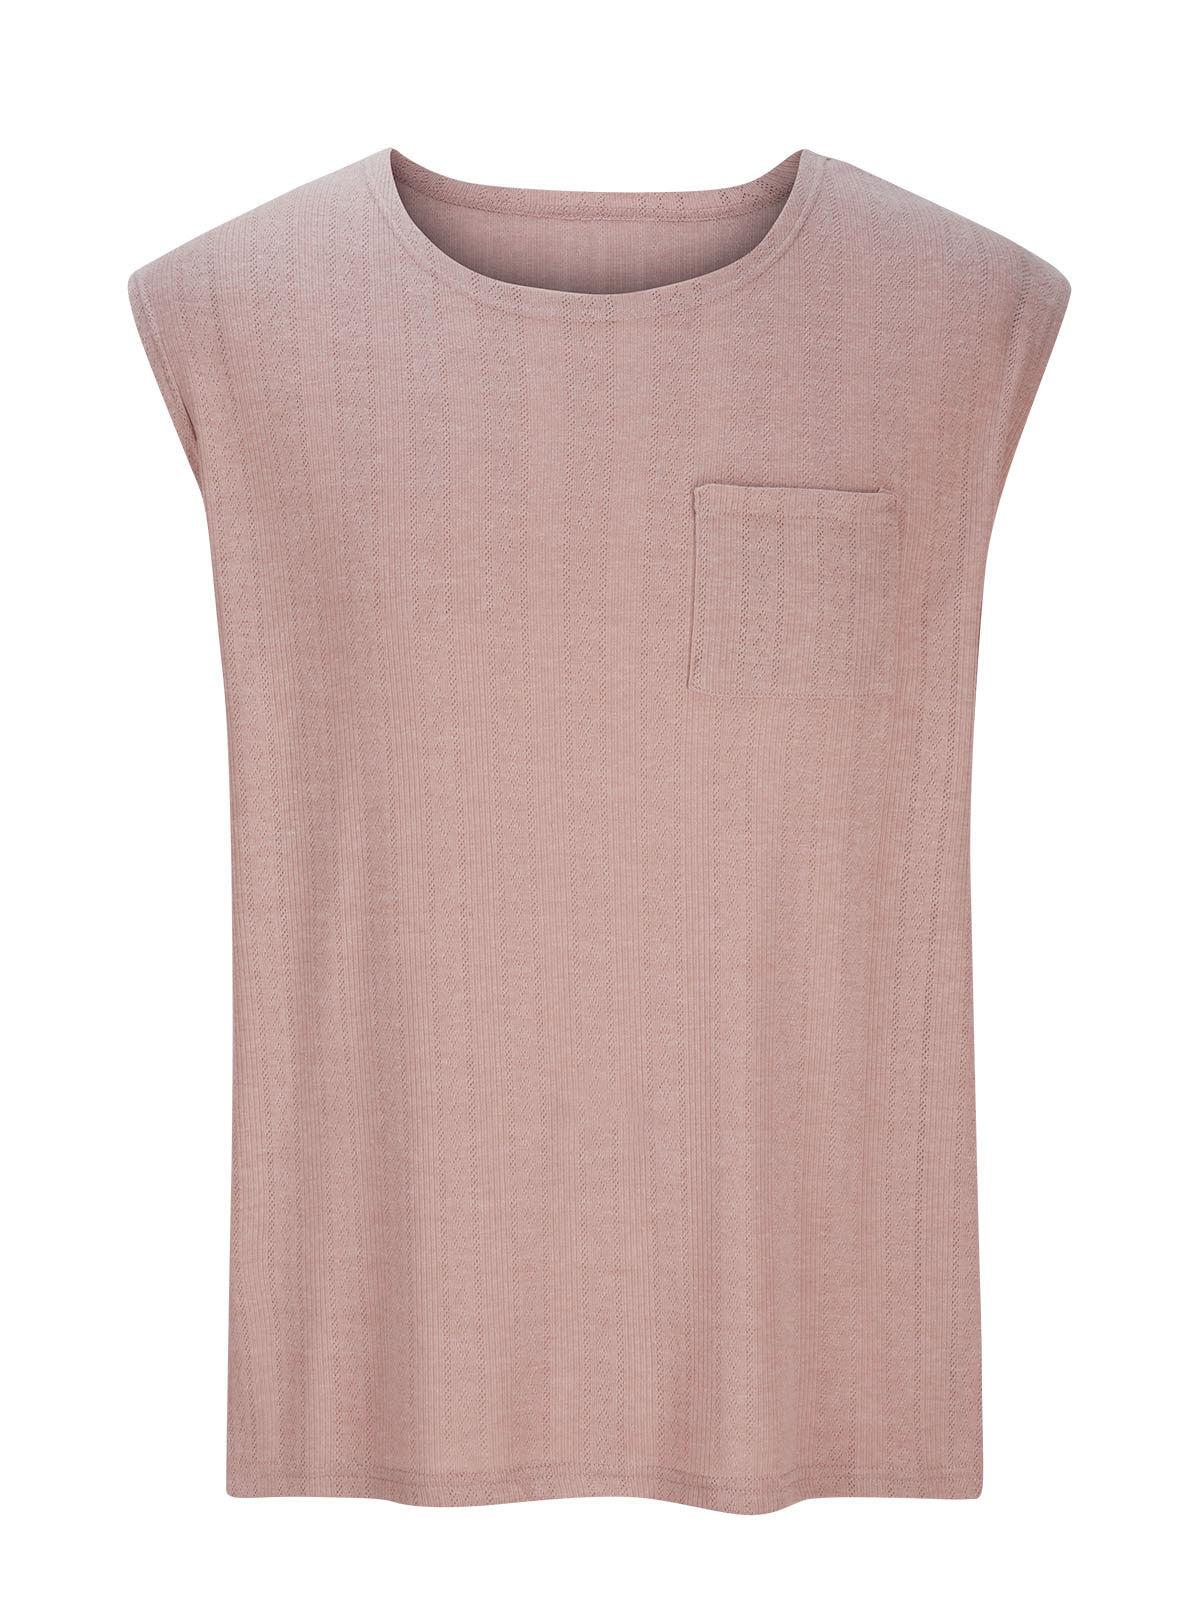 Men's Summer Jacquard Pocket Comfortable Loose Sleeveless T-shirt